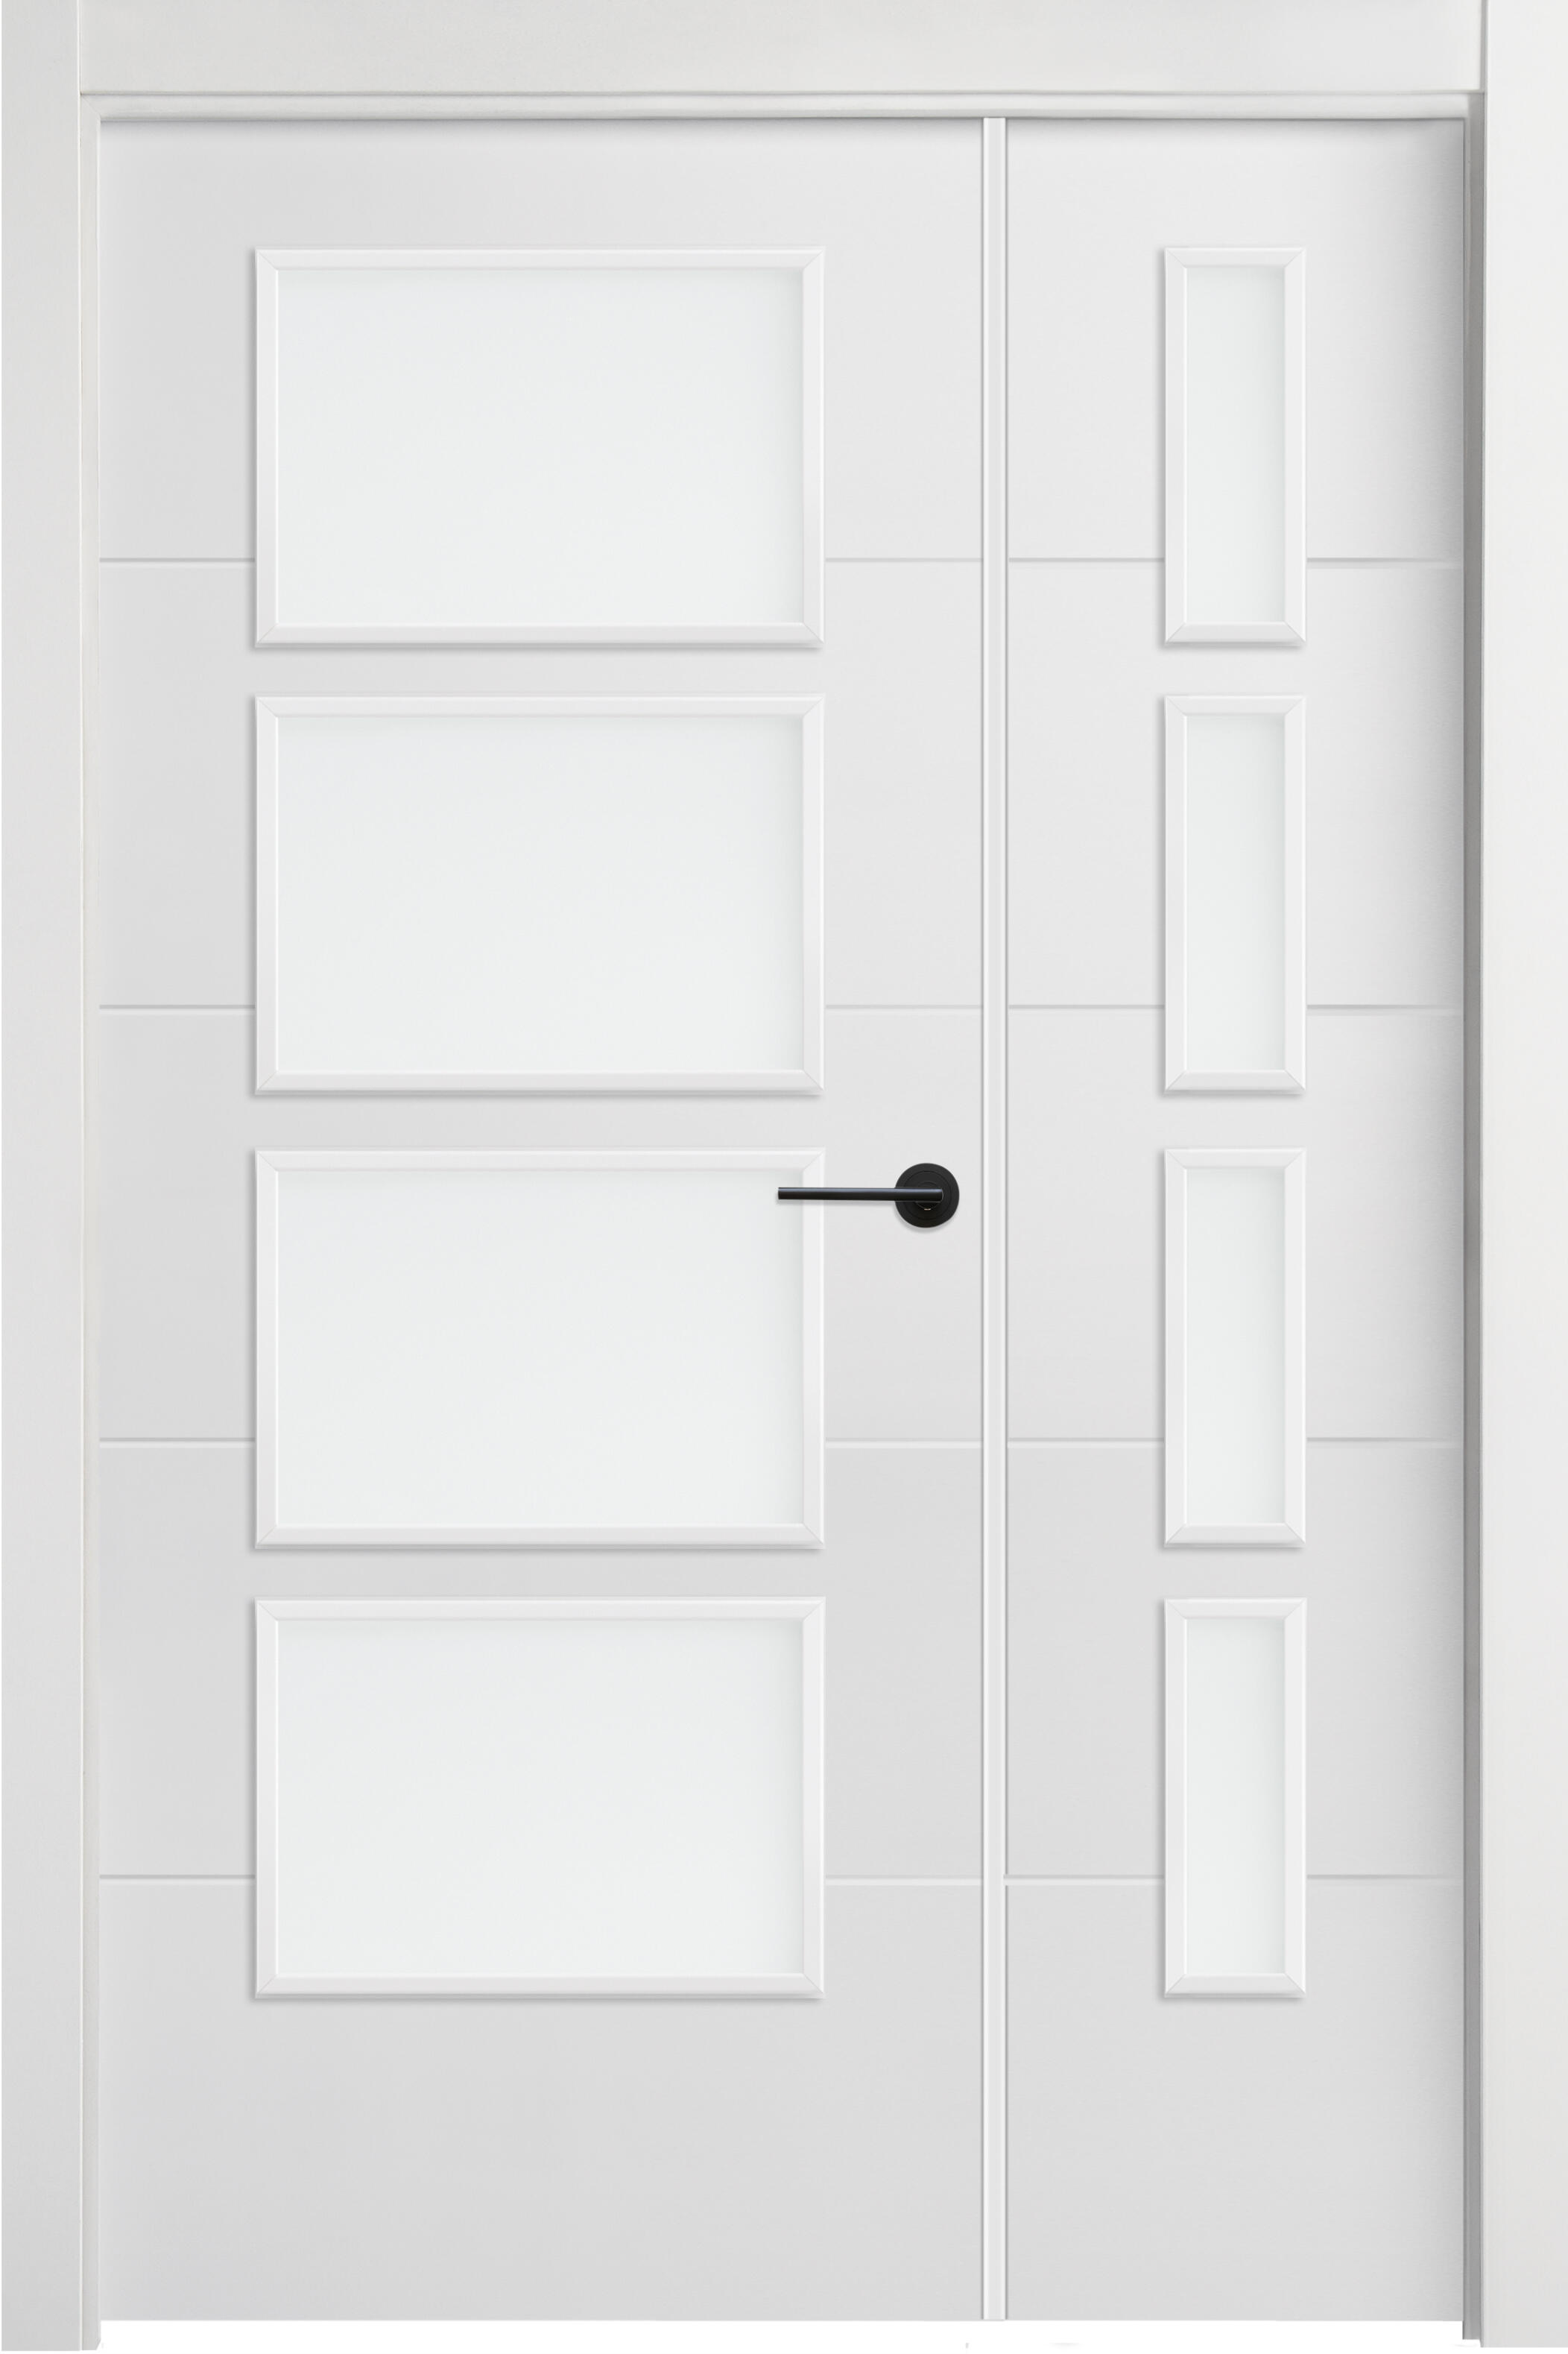 Puerta lucerna plus black blanco de apertura izquierda con cristal 115 cm